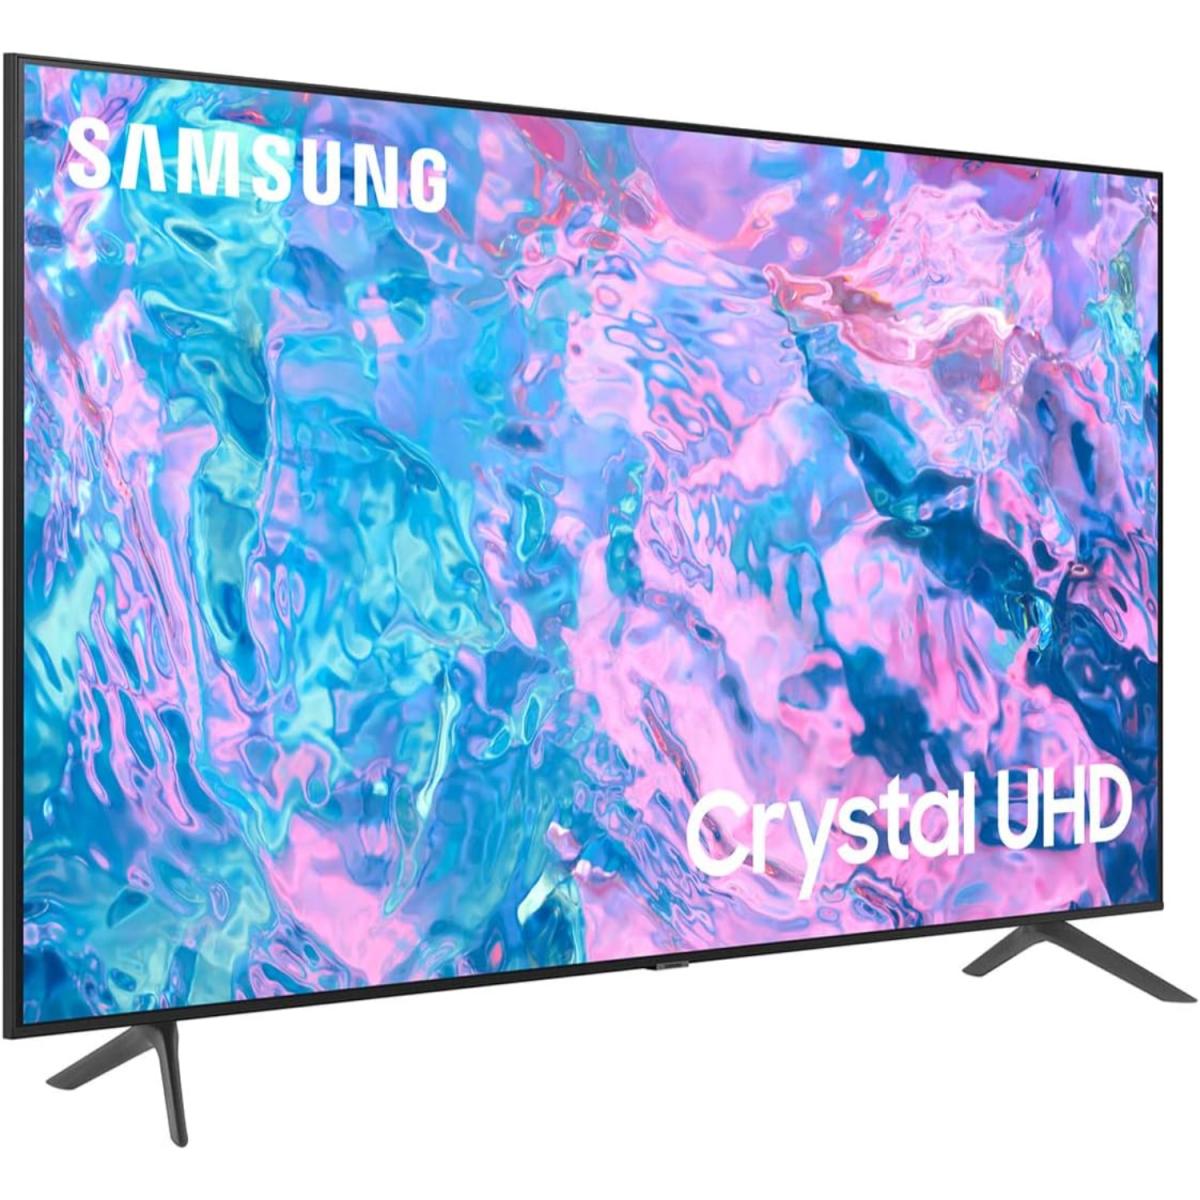 TV SAMSUNG LED 50" SMART CRYSTAL UHD